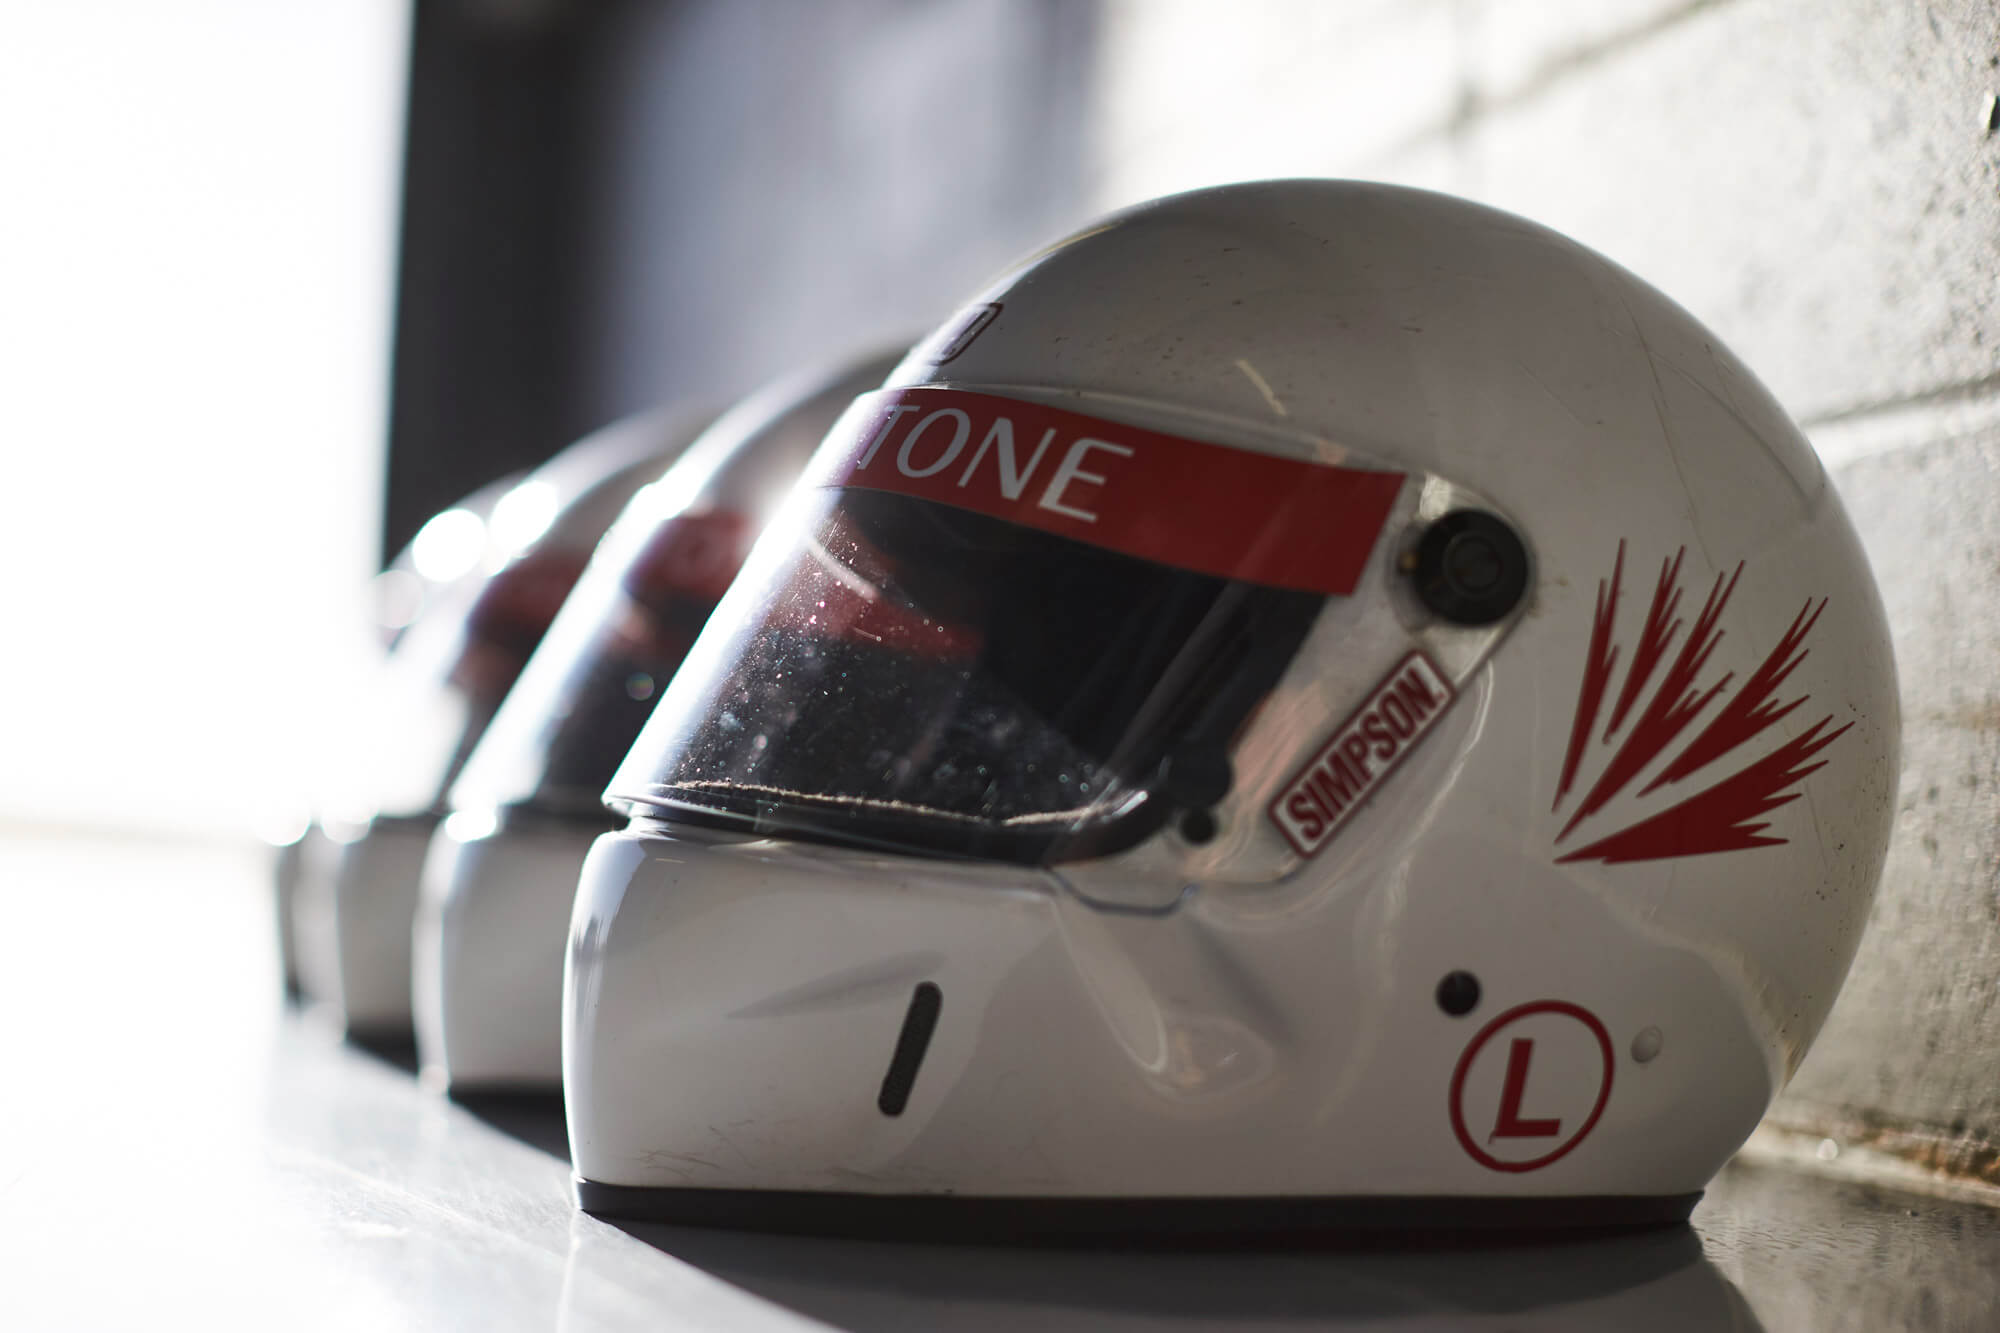 Silverstone branded helmets lined up in a race garage